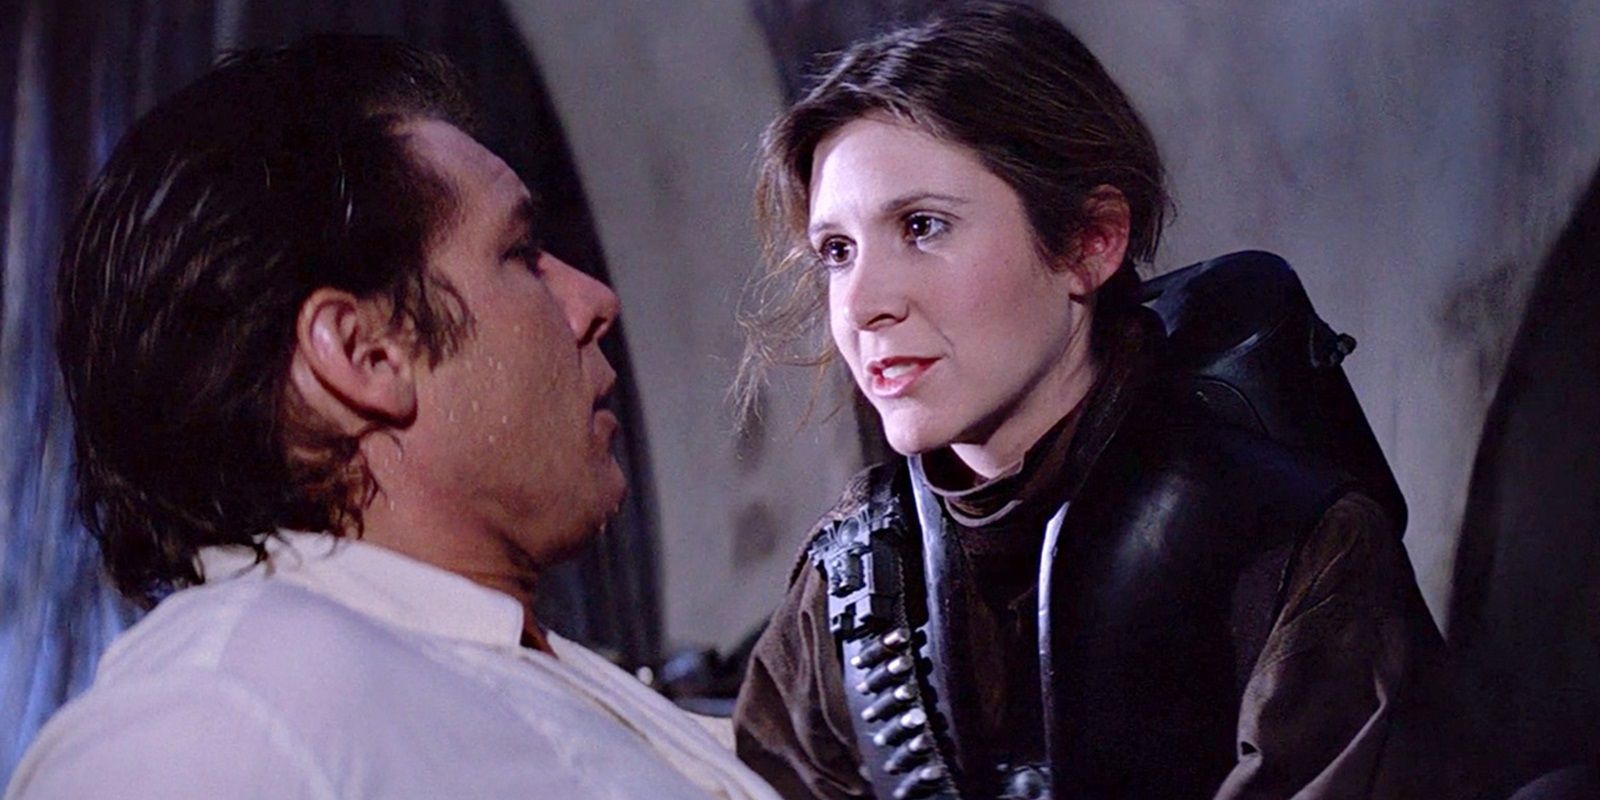 Leia saves Han in Return of the Jedi